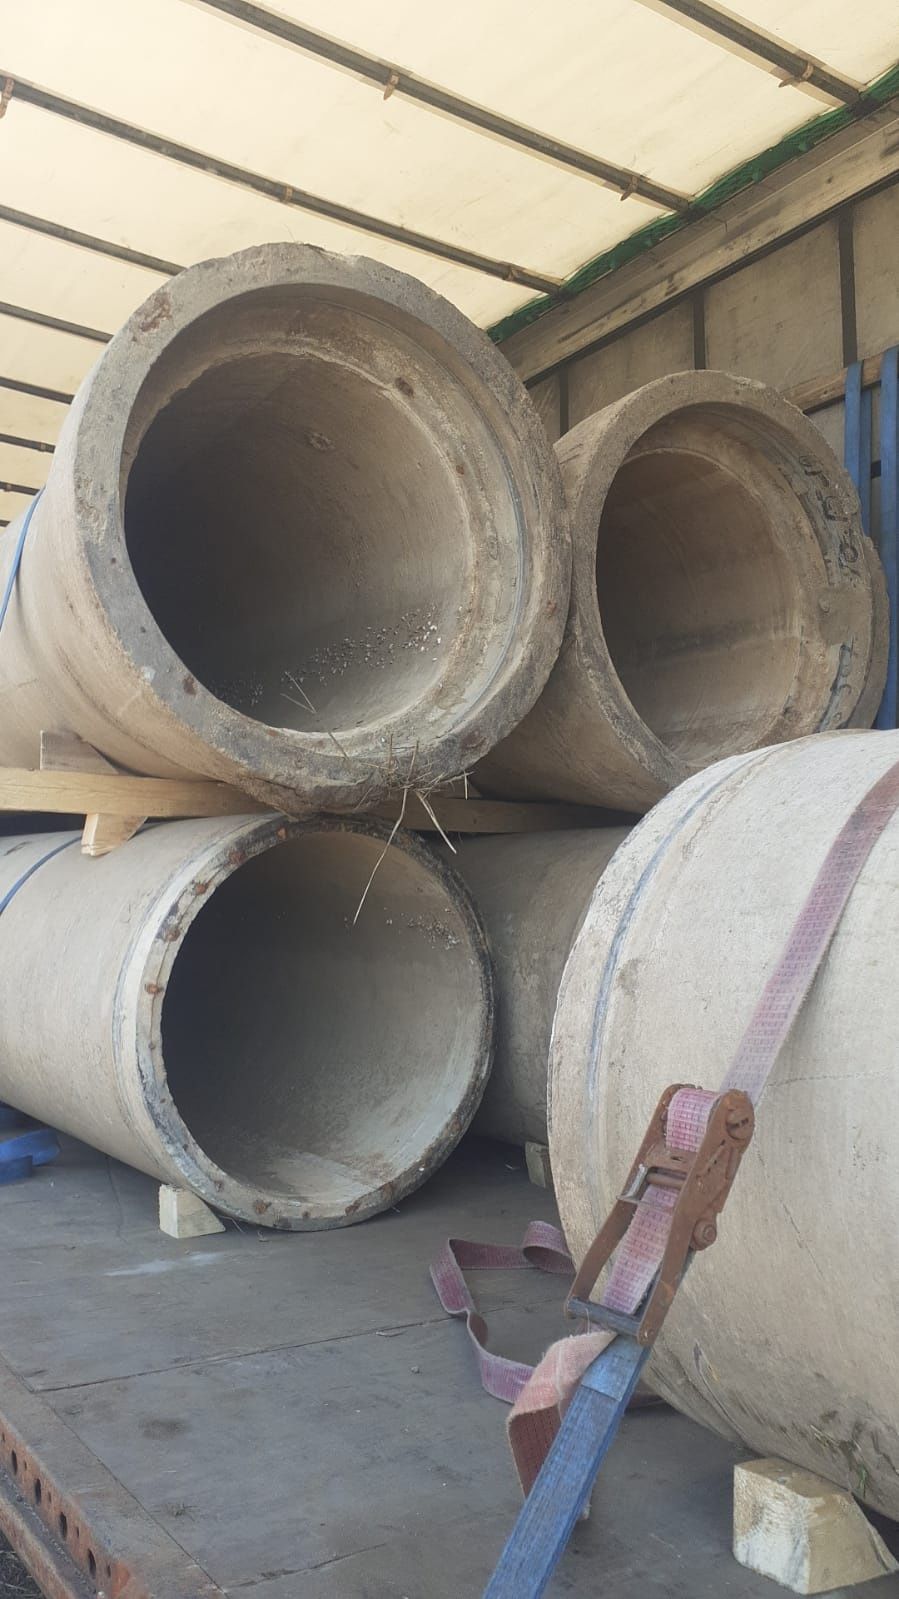 Vand tuburi din beton armat tip premo pentru podețe